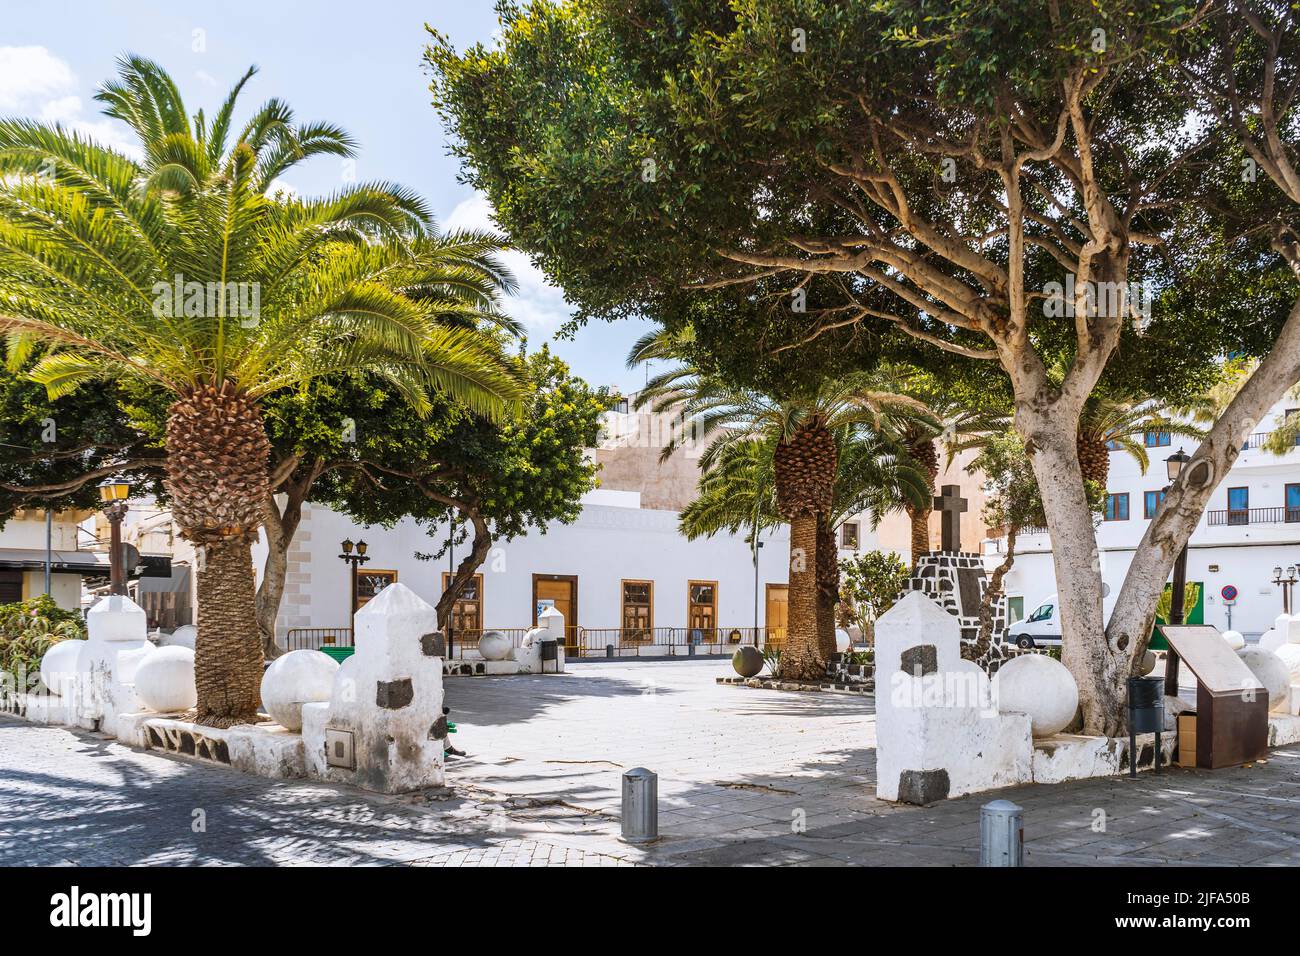 Charming square named Plaza de las palmas in Arrecife, capital city of Lanzarote, Canary Islands, Spain Stock Photo